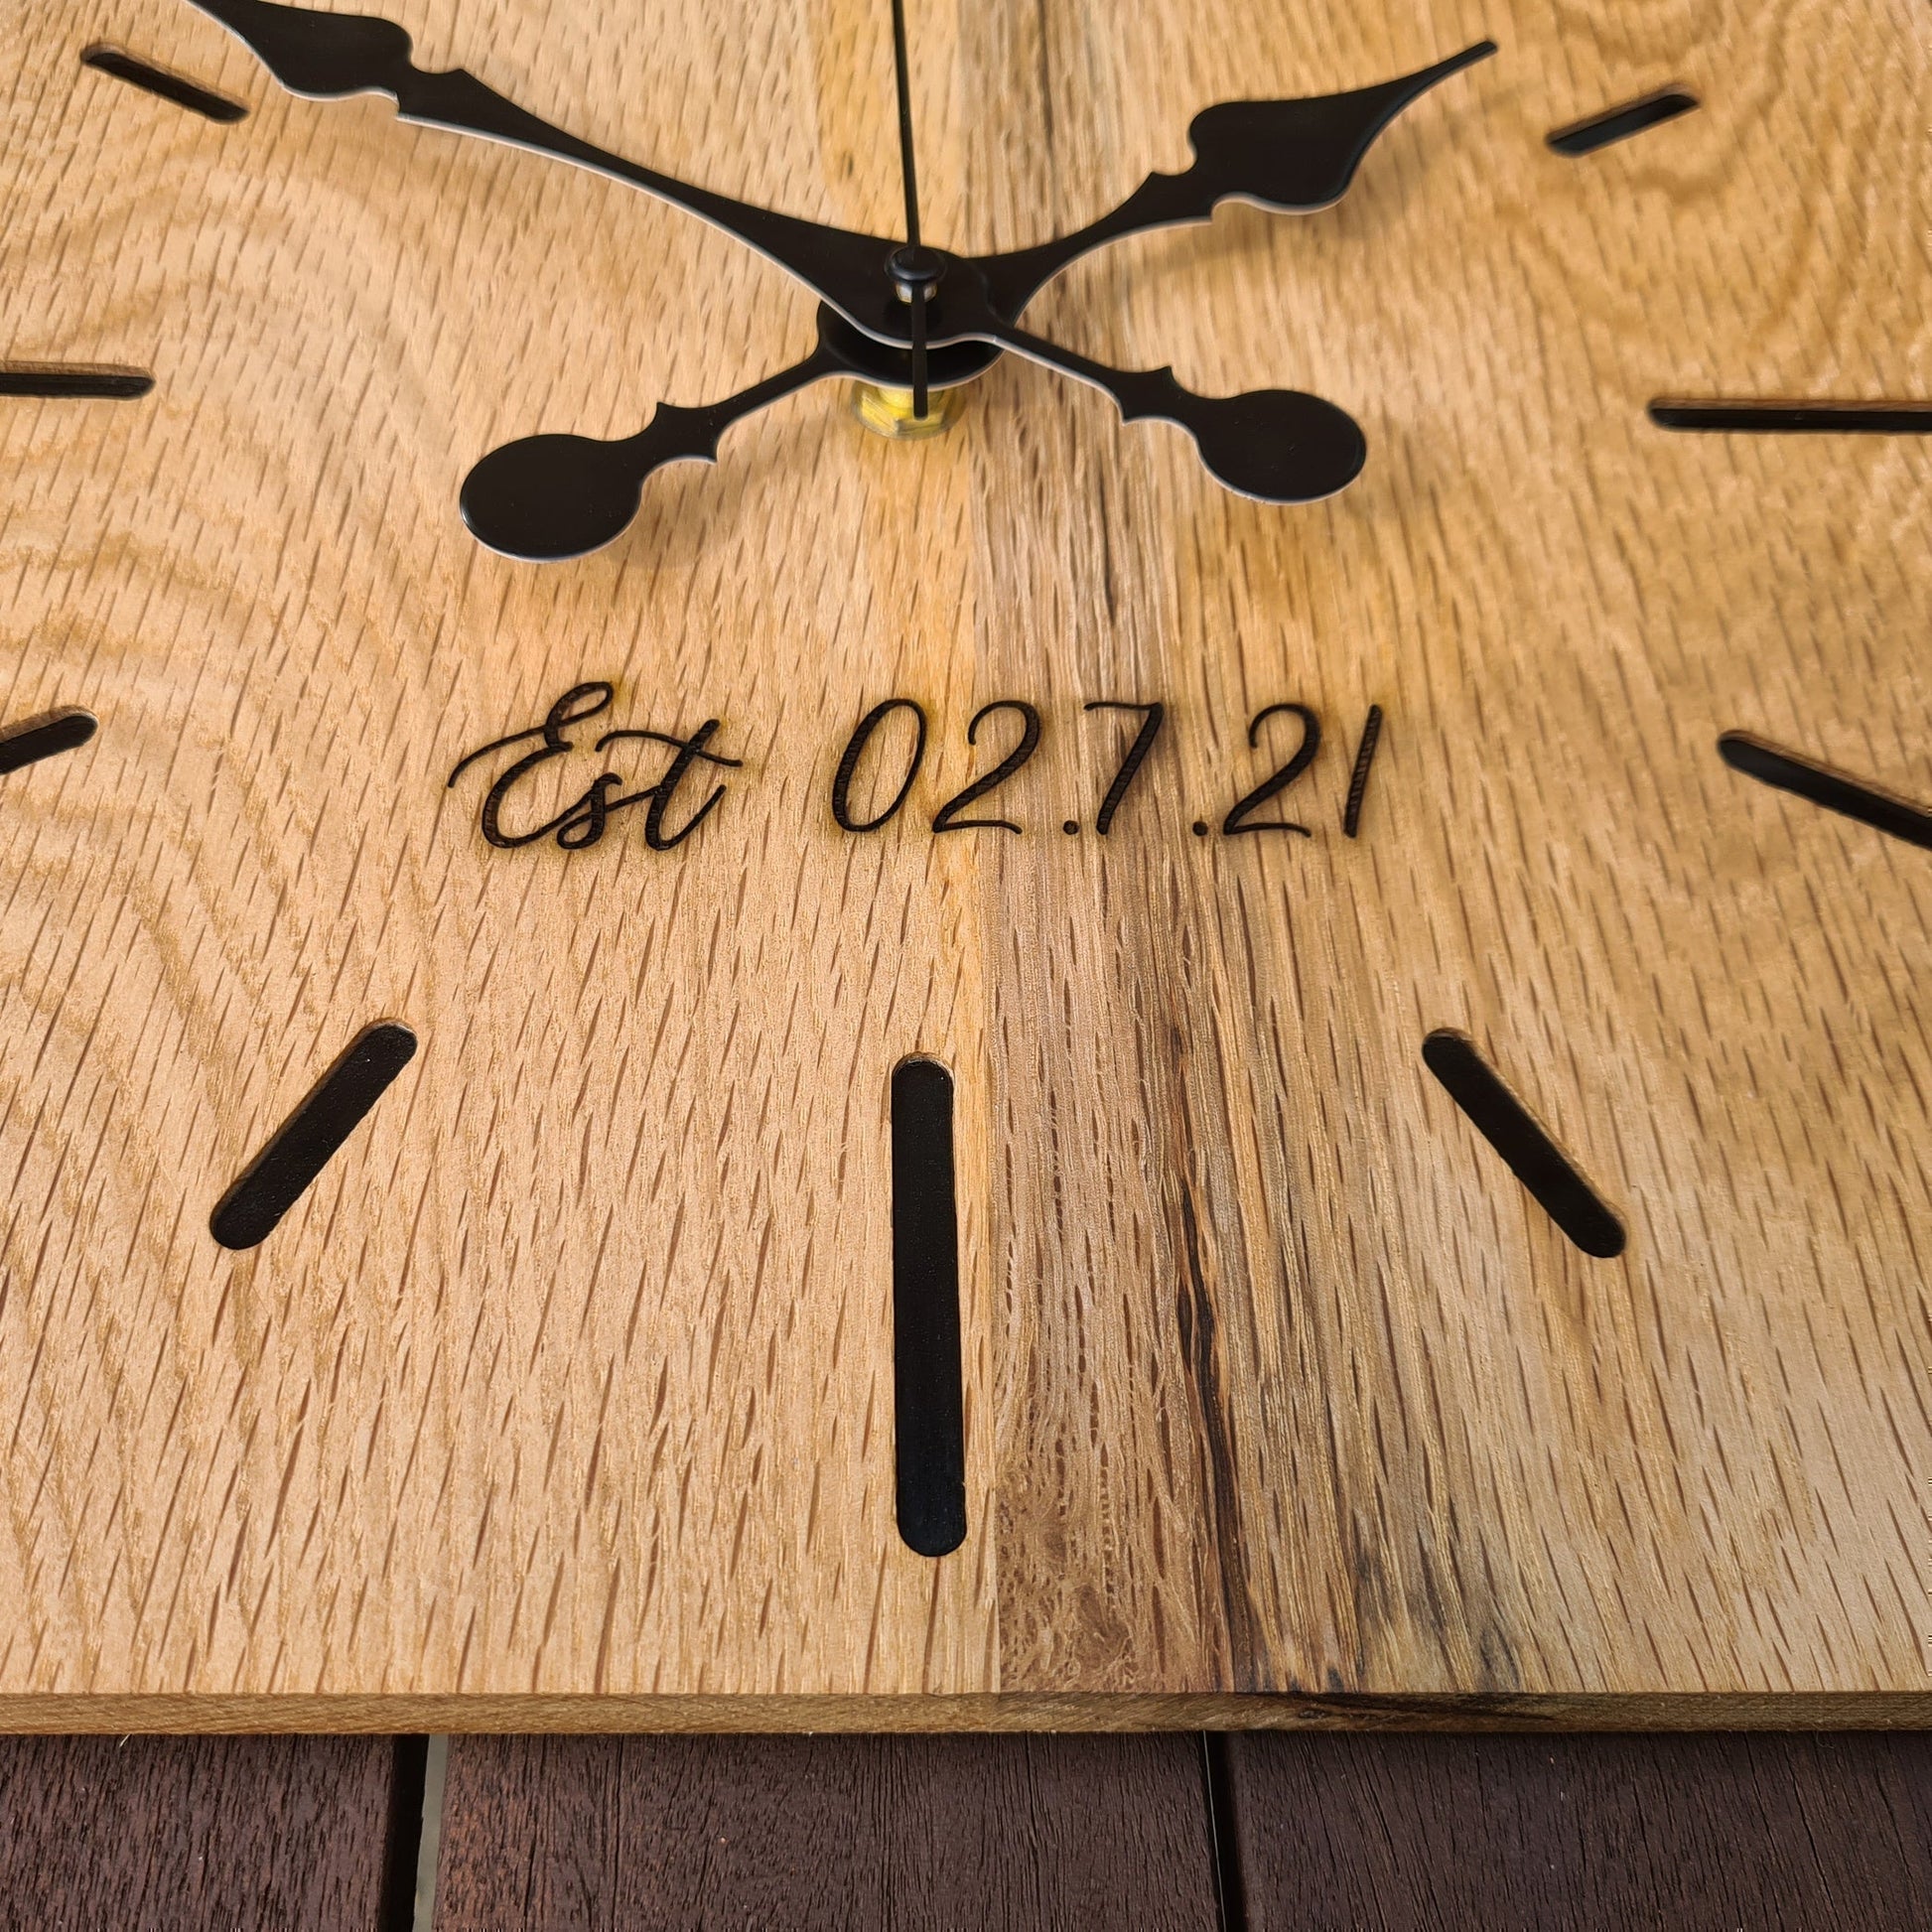 100% Solid Oak Wooden Wall Clock | Large Square Kitchen Clock | Rustic Wall Clock - Clock Design Co™